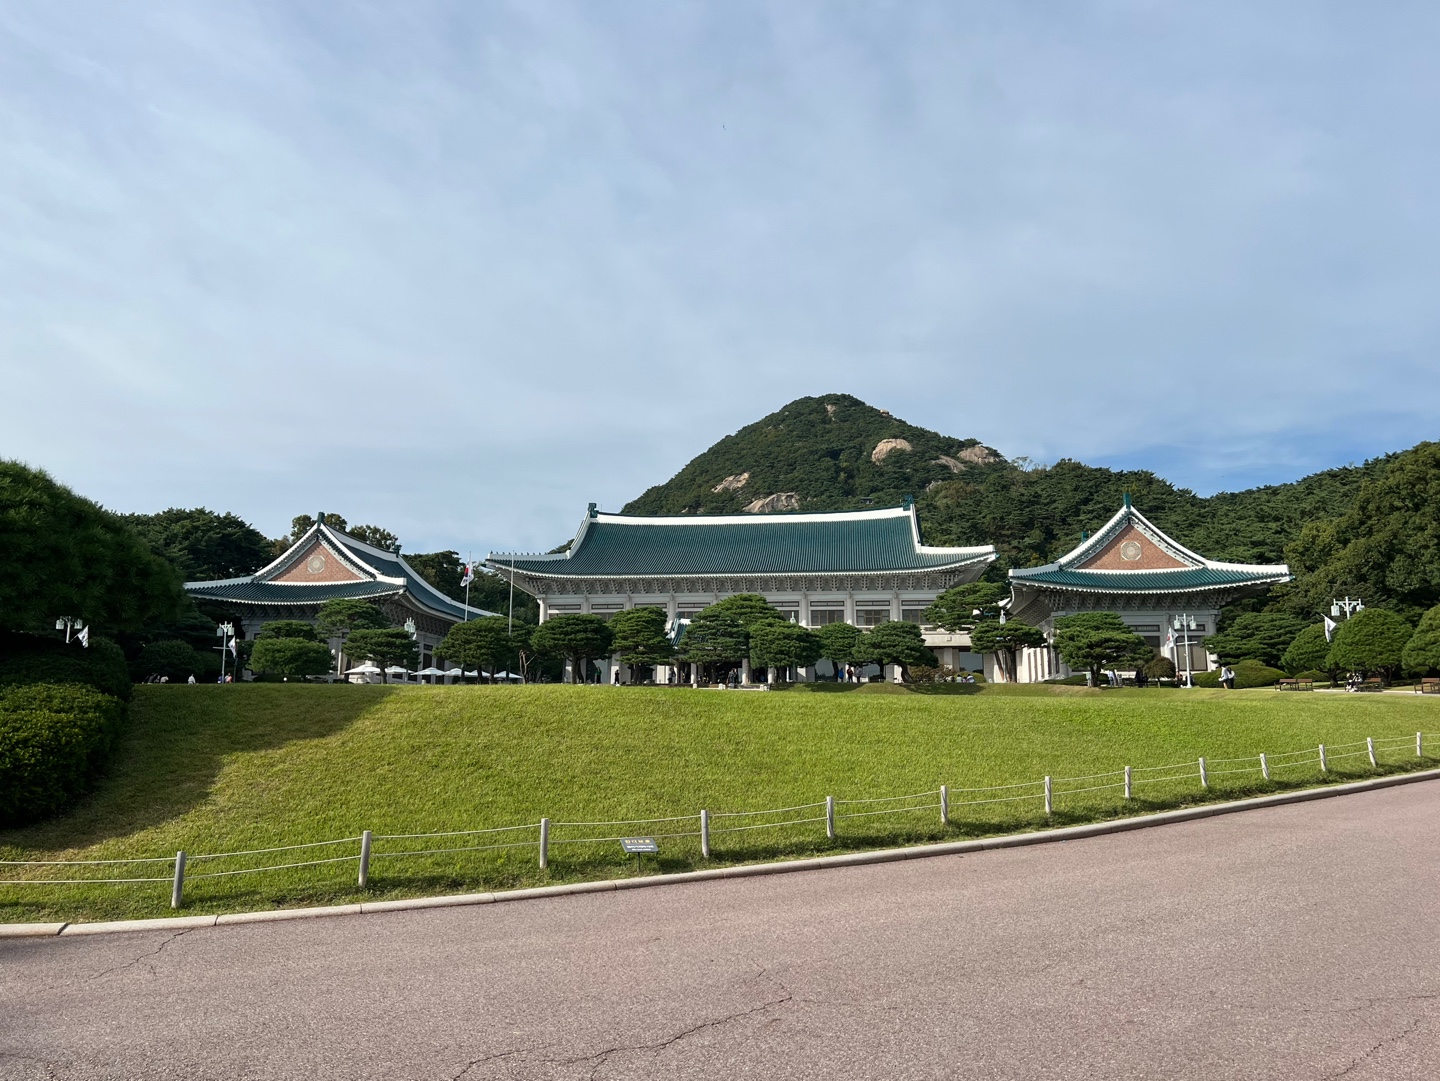 Cheong Wa Dae/ Blue House – Presidential Residence